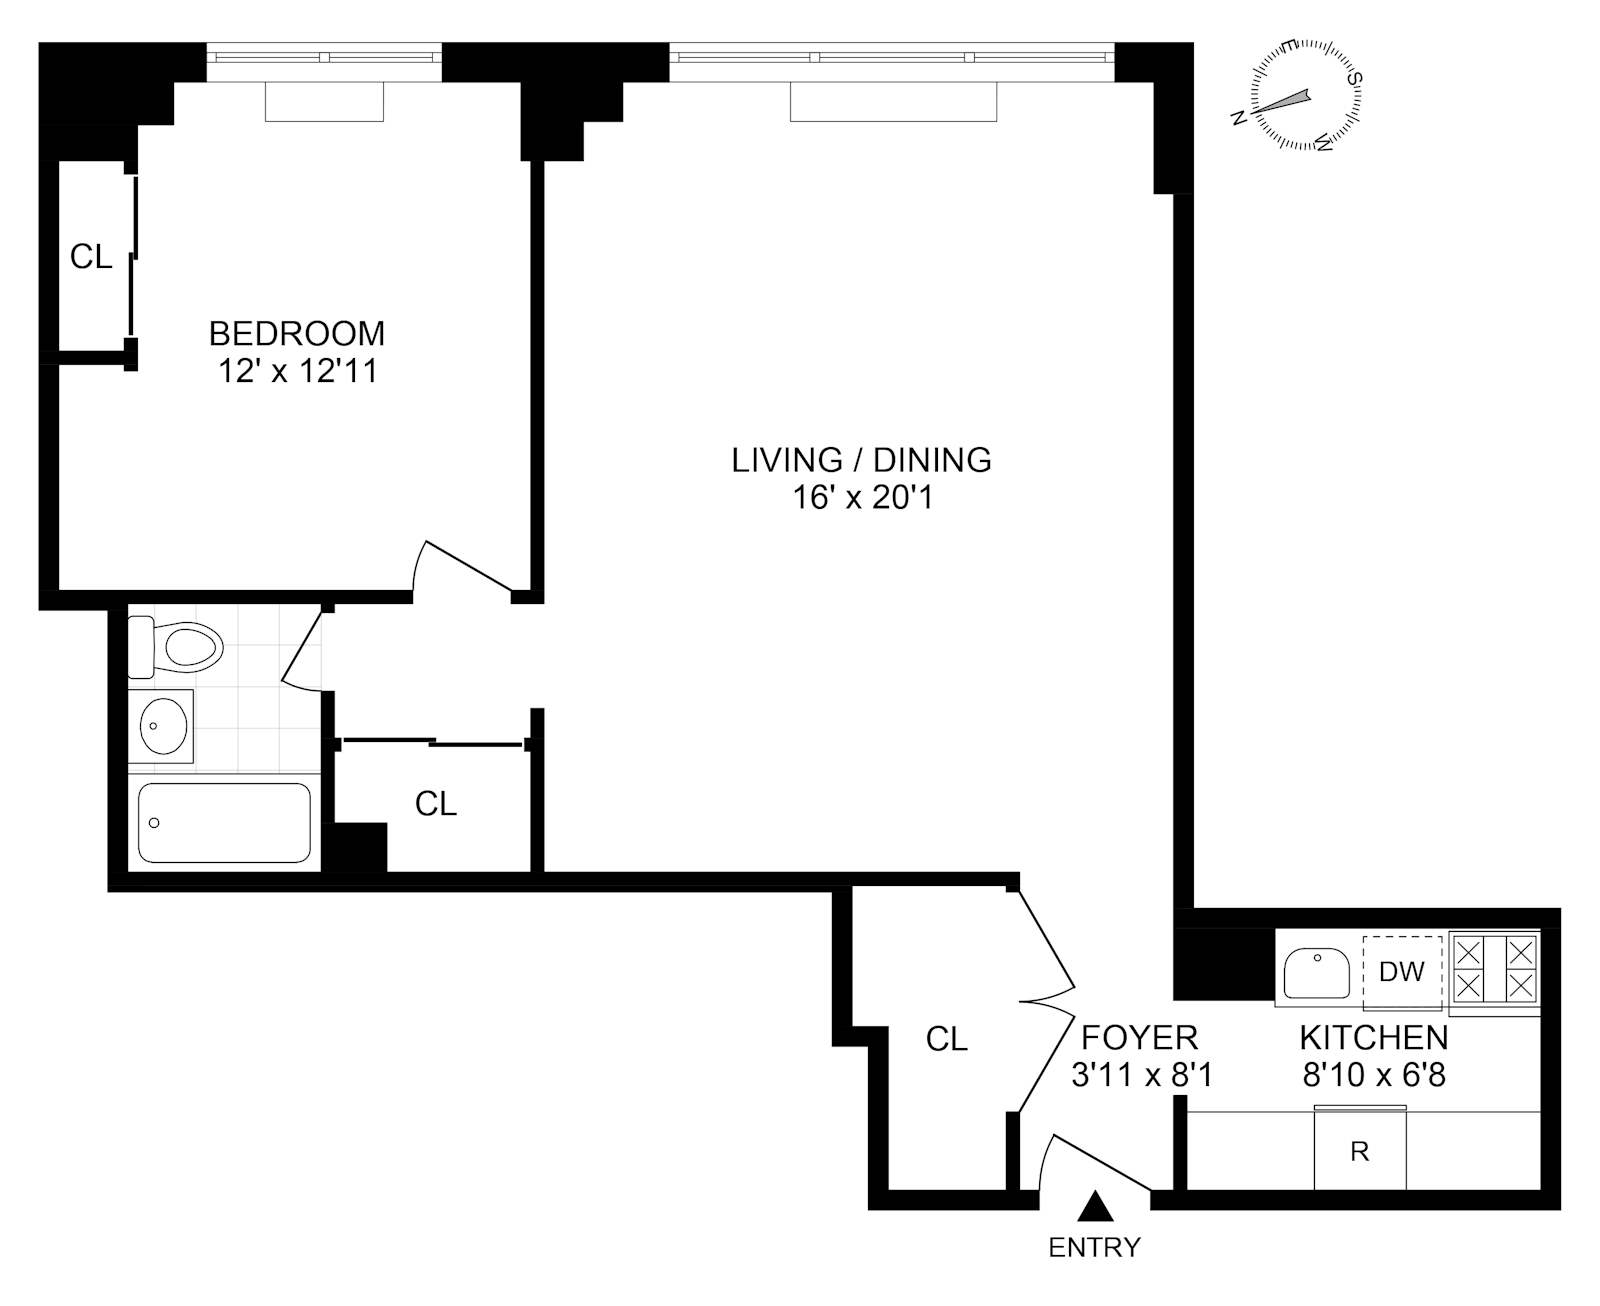 Floorplan for 170 West End Avenue, 14A